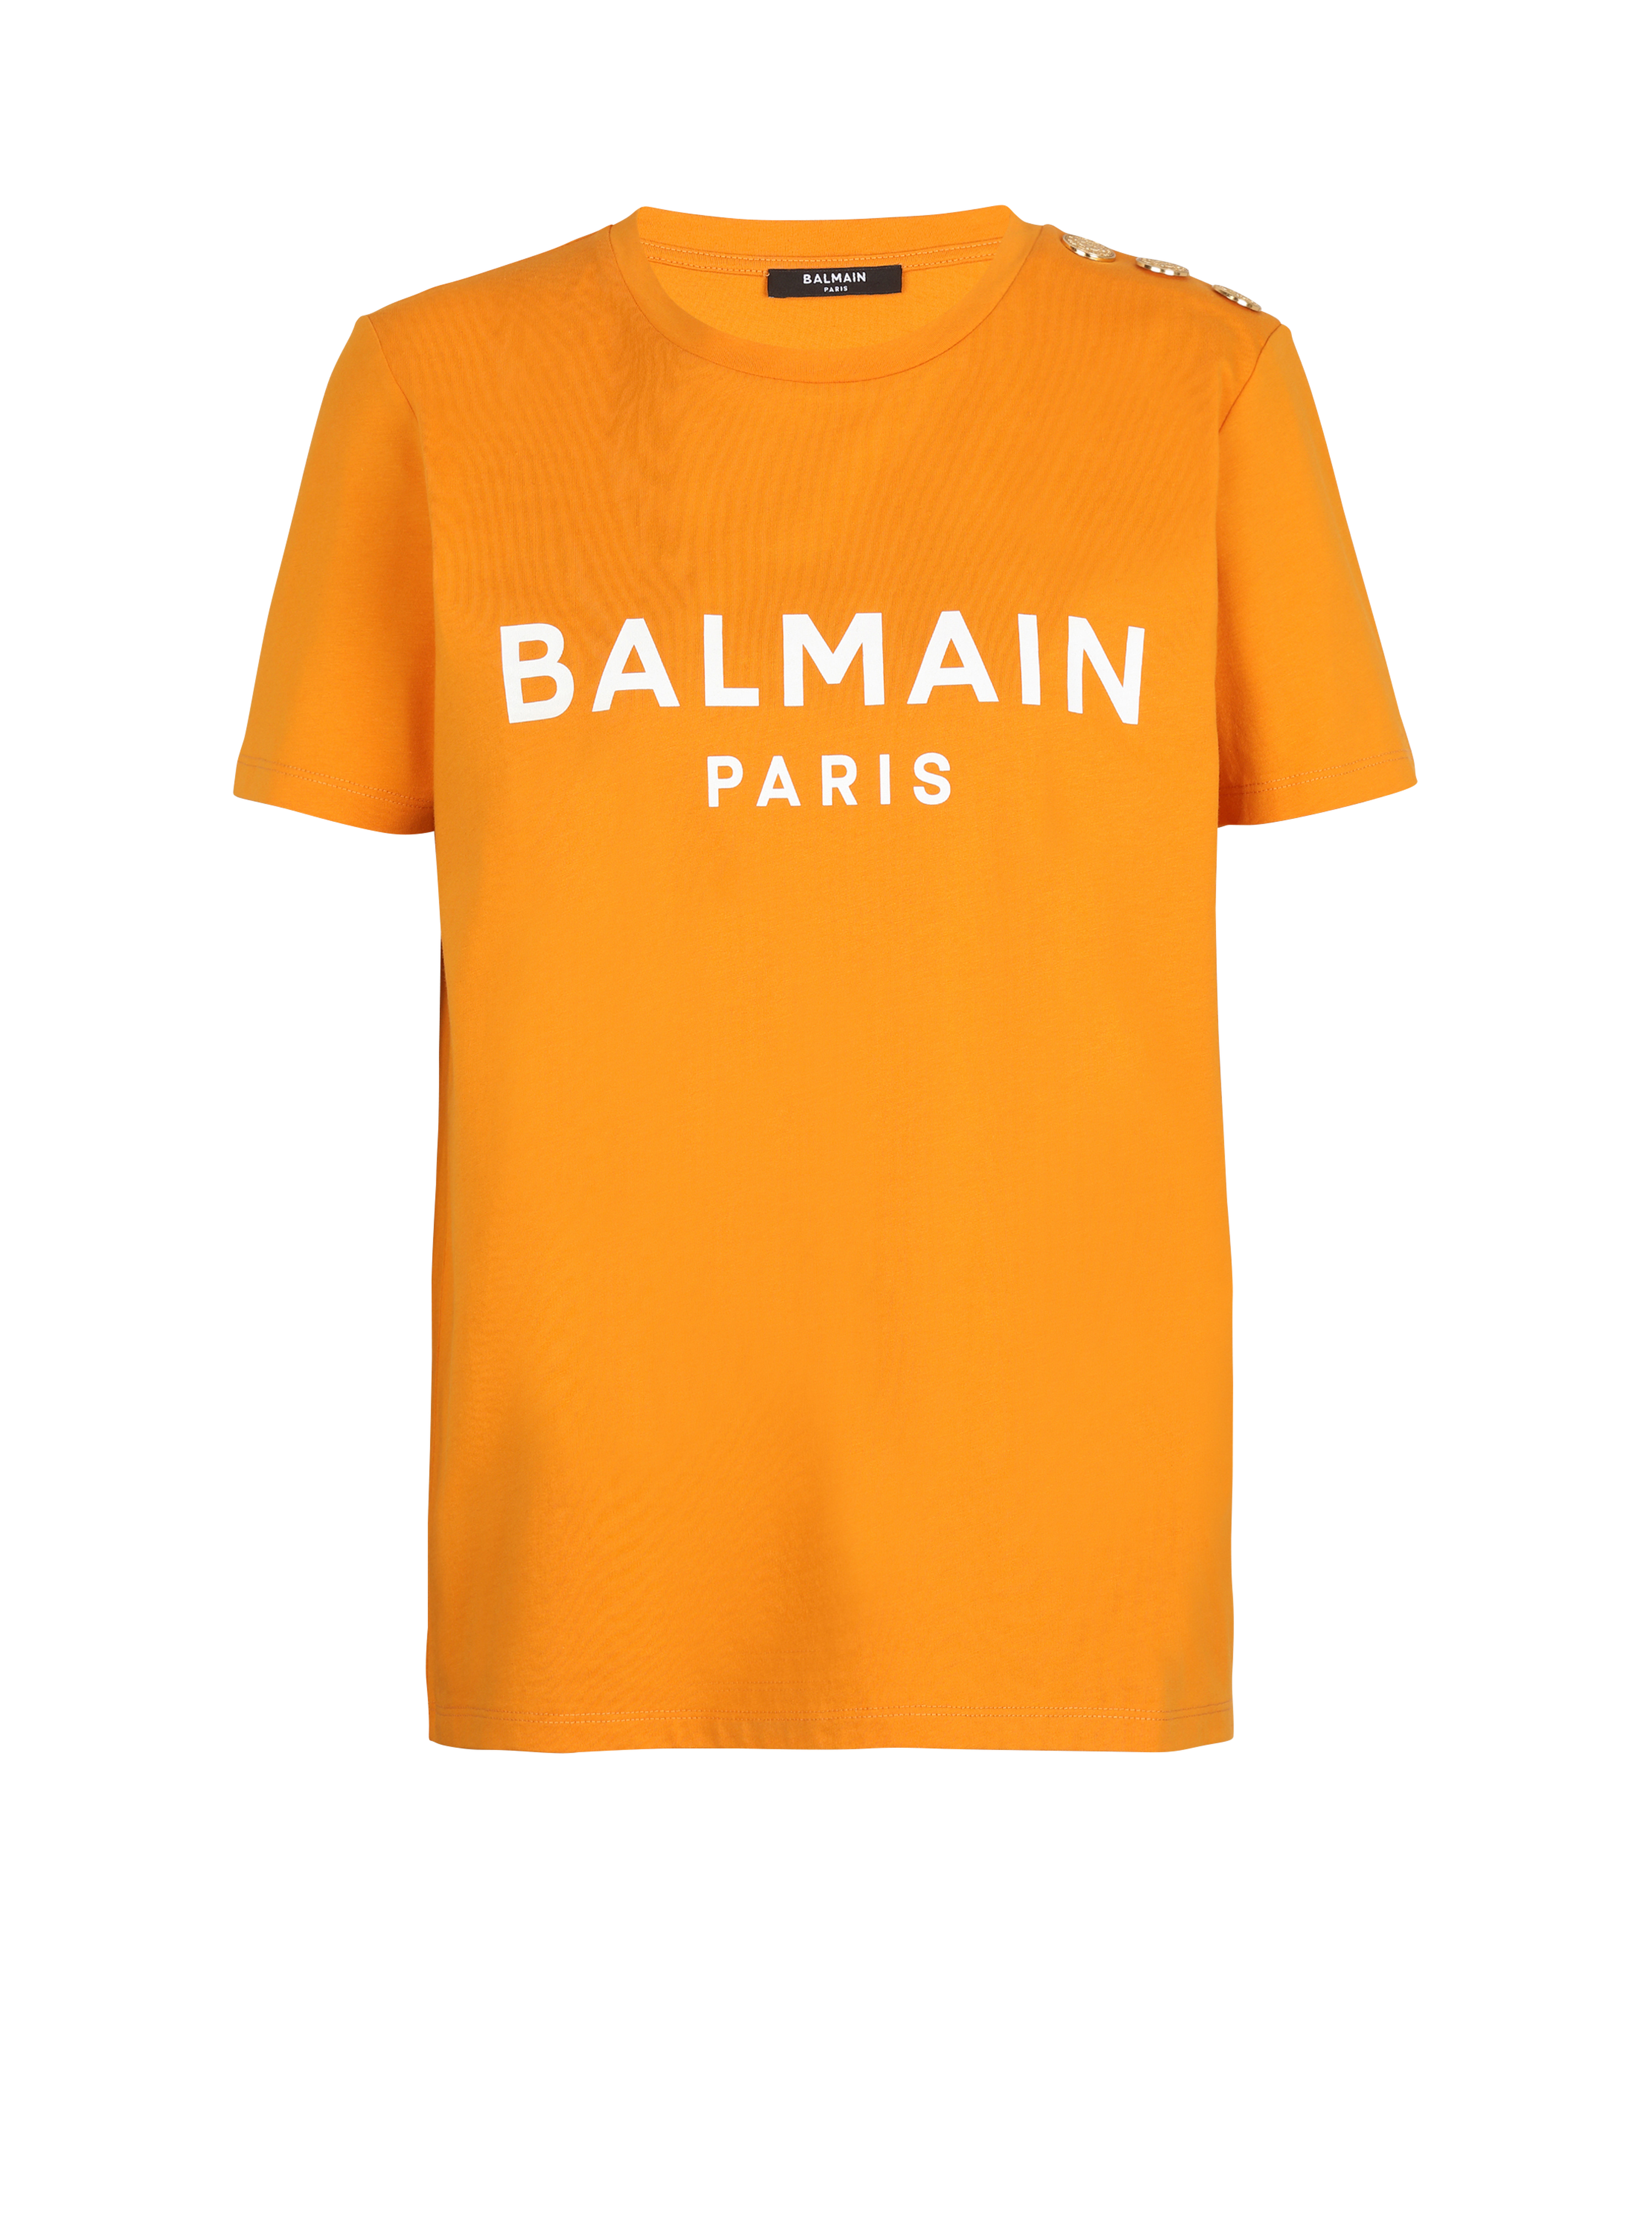 Eco-responsible cotton T-shirt with Balmain logo print, orange